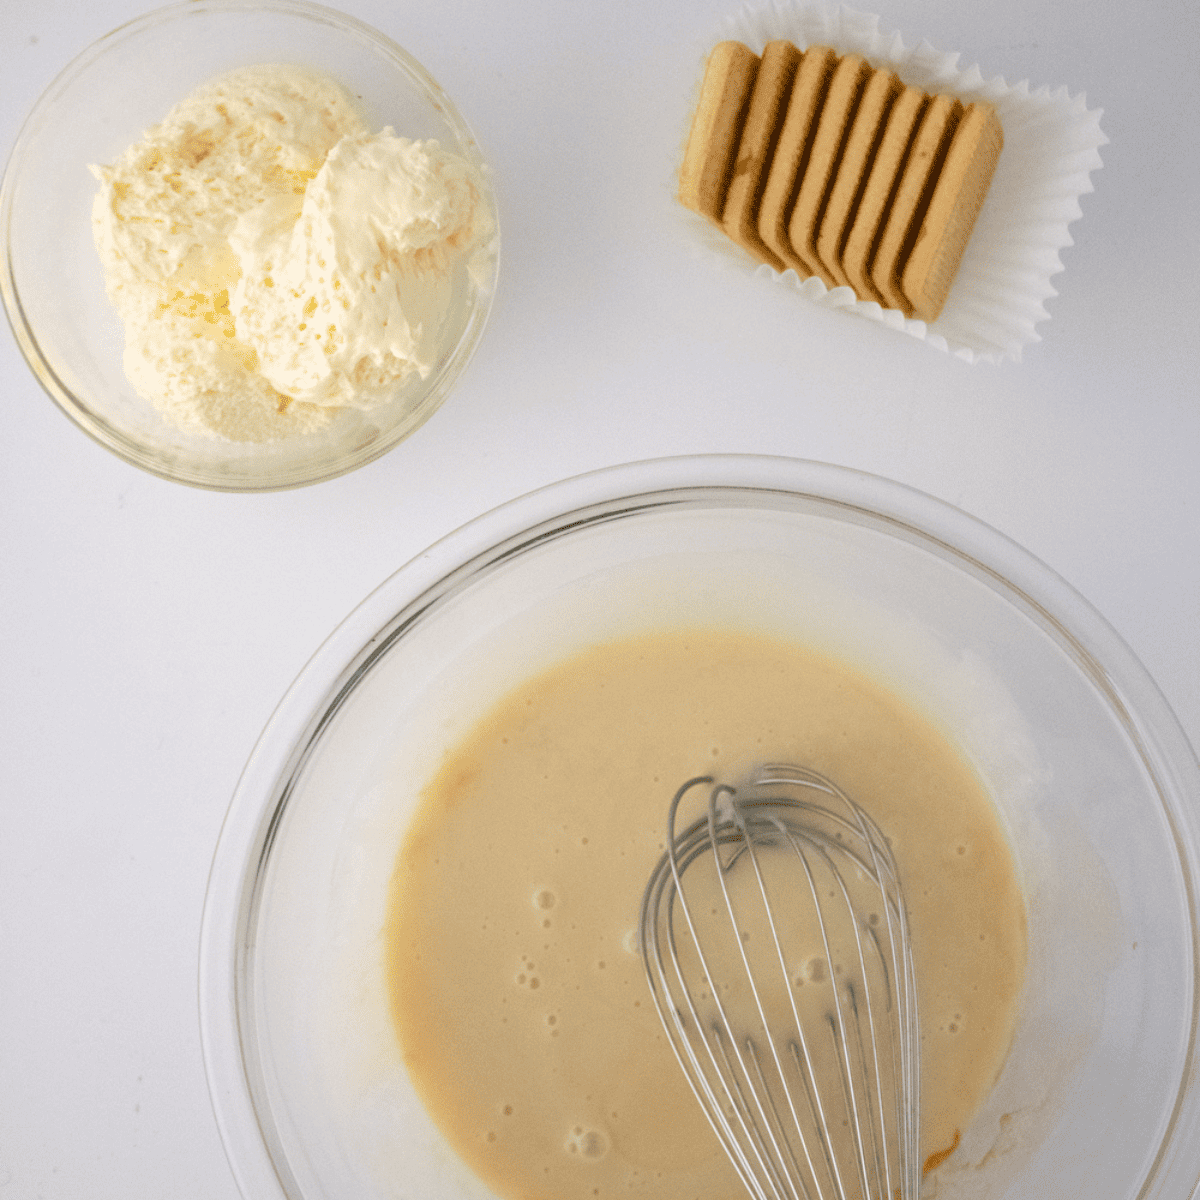 Ninja Creami Cookie Butter Ice Cream - Fork To Spoon